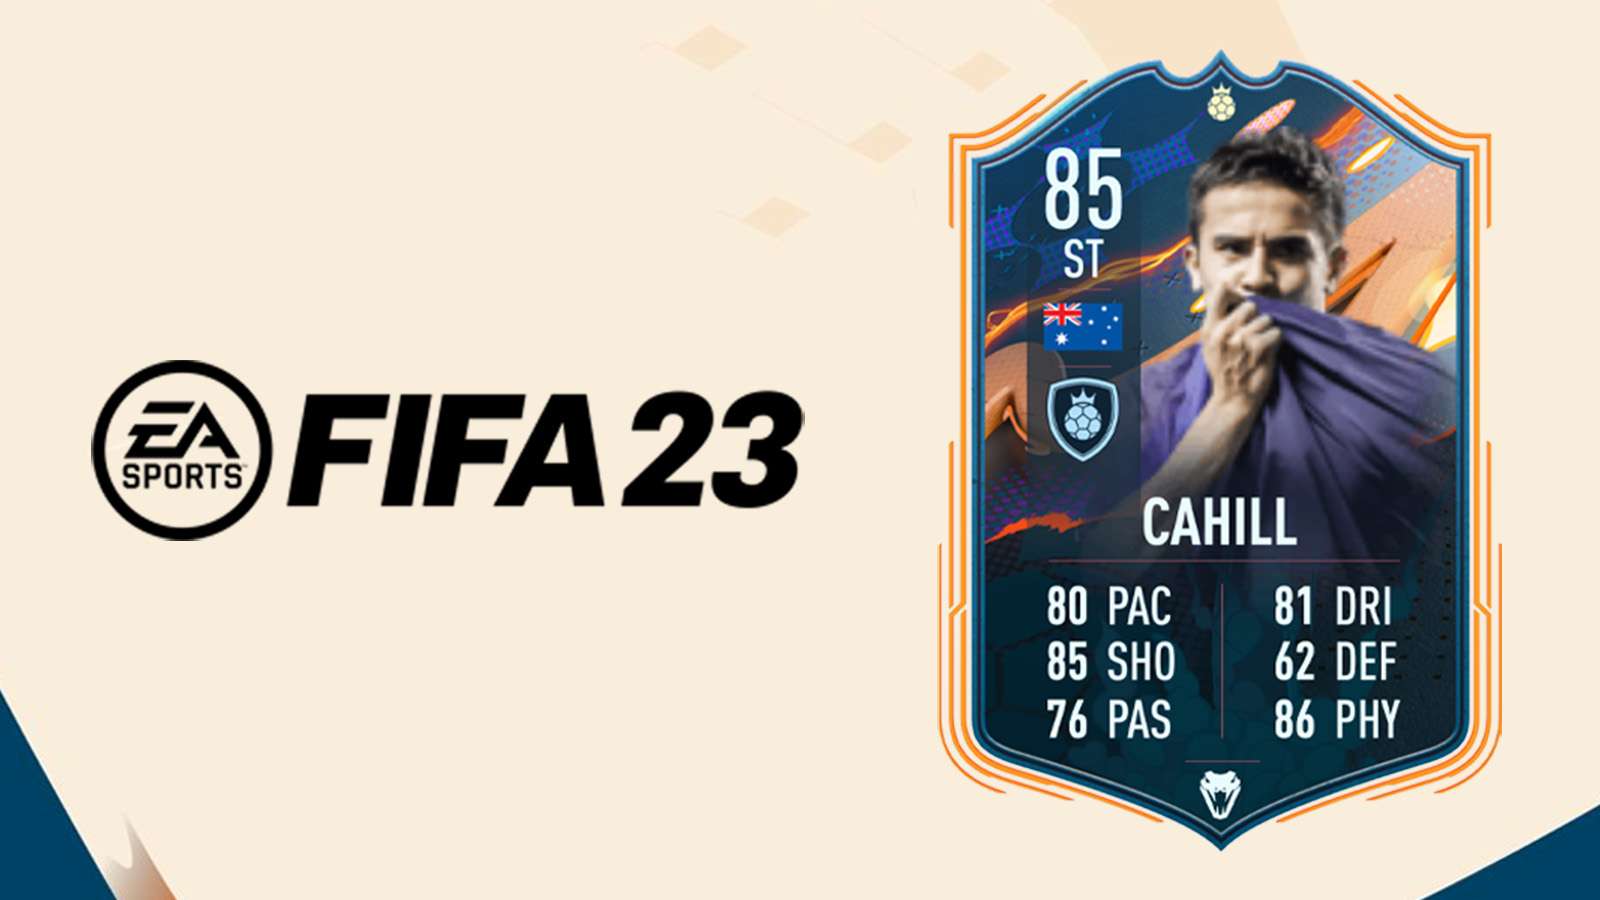 Tim Cahill Hero next to FIFA 23 logo